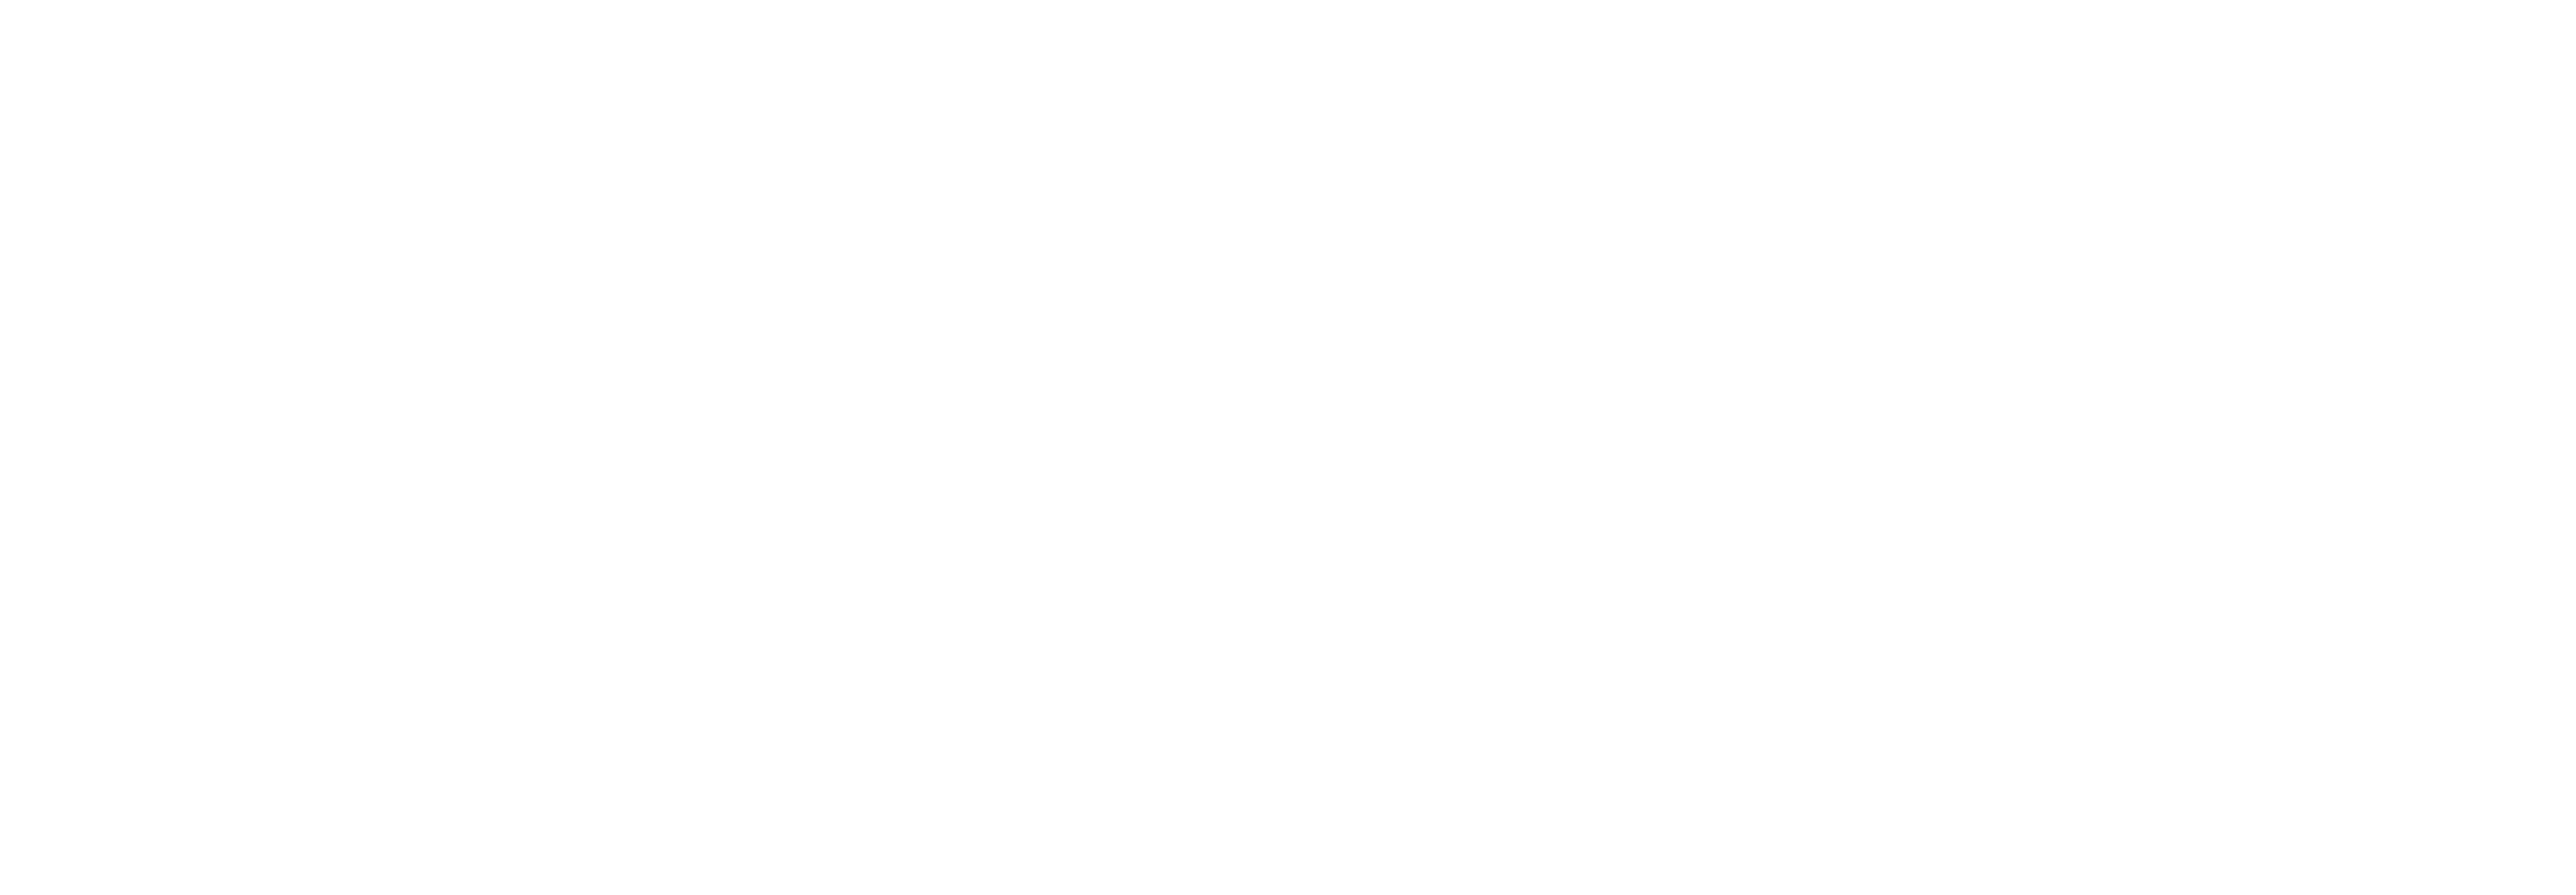 The Boyfriend Logo - Try My Boyfriend